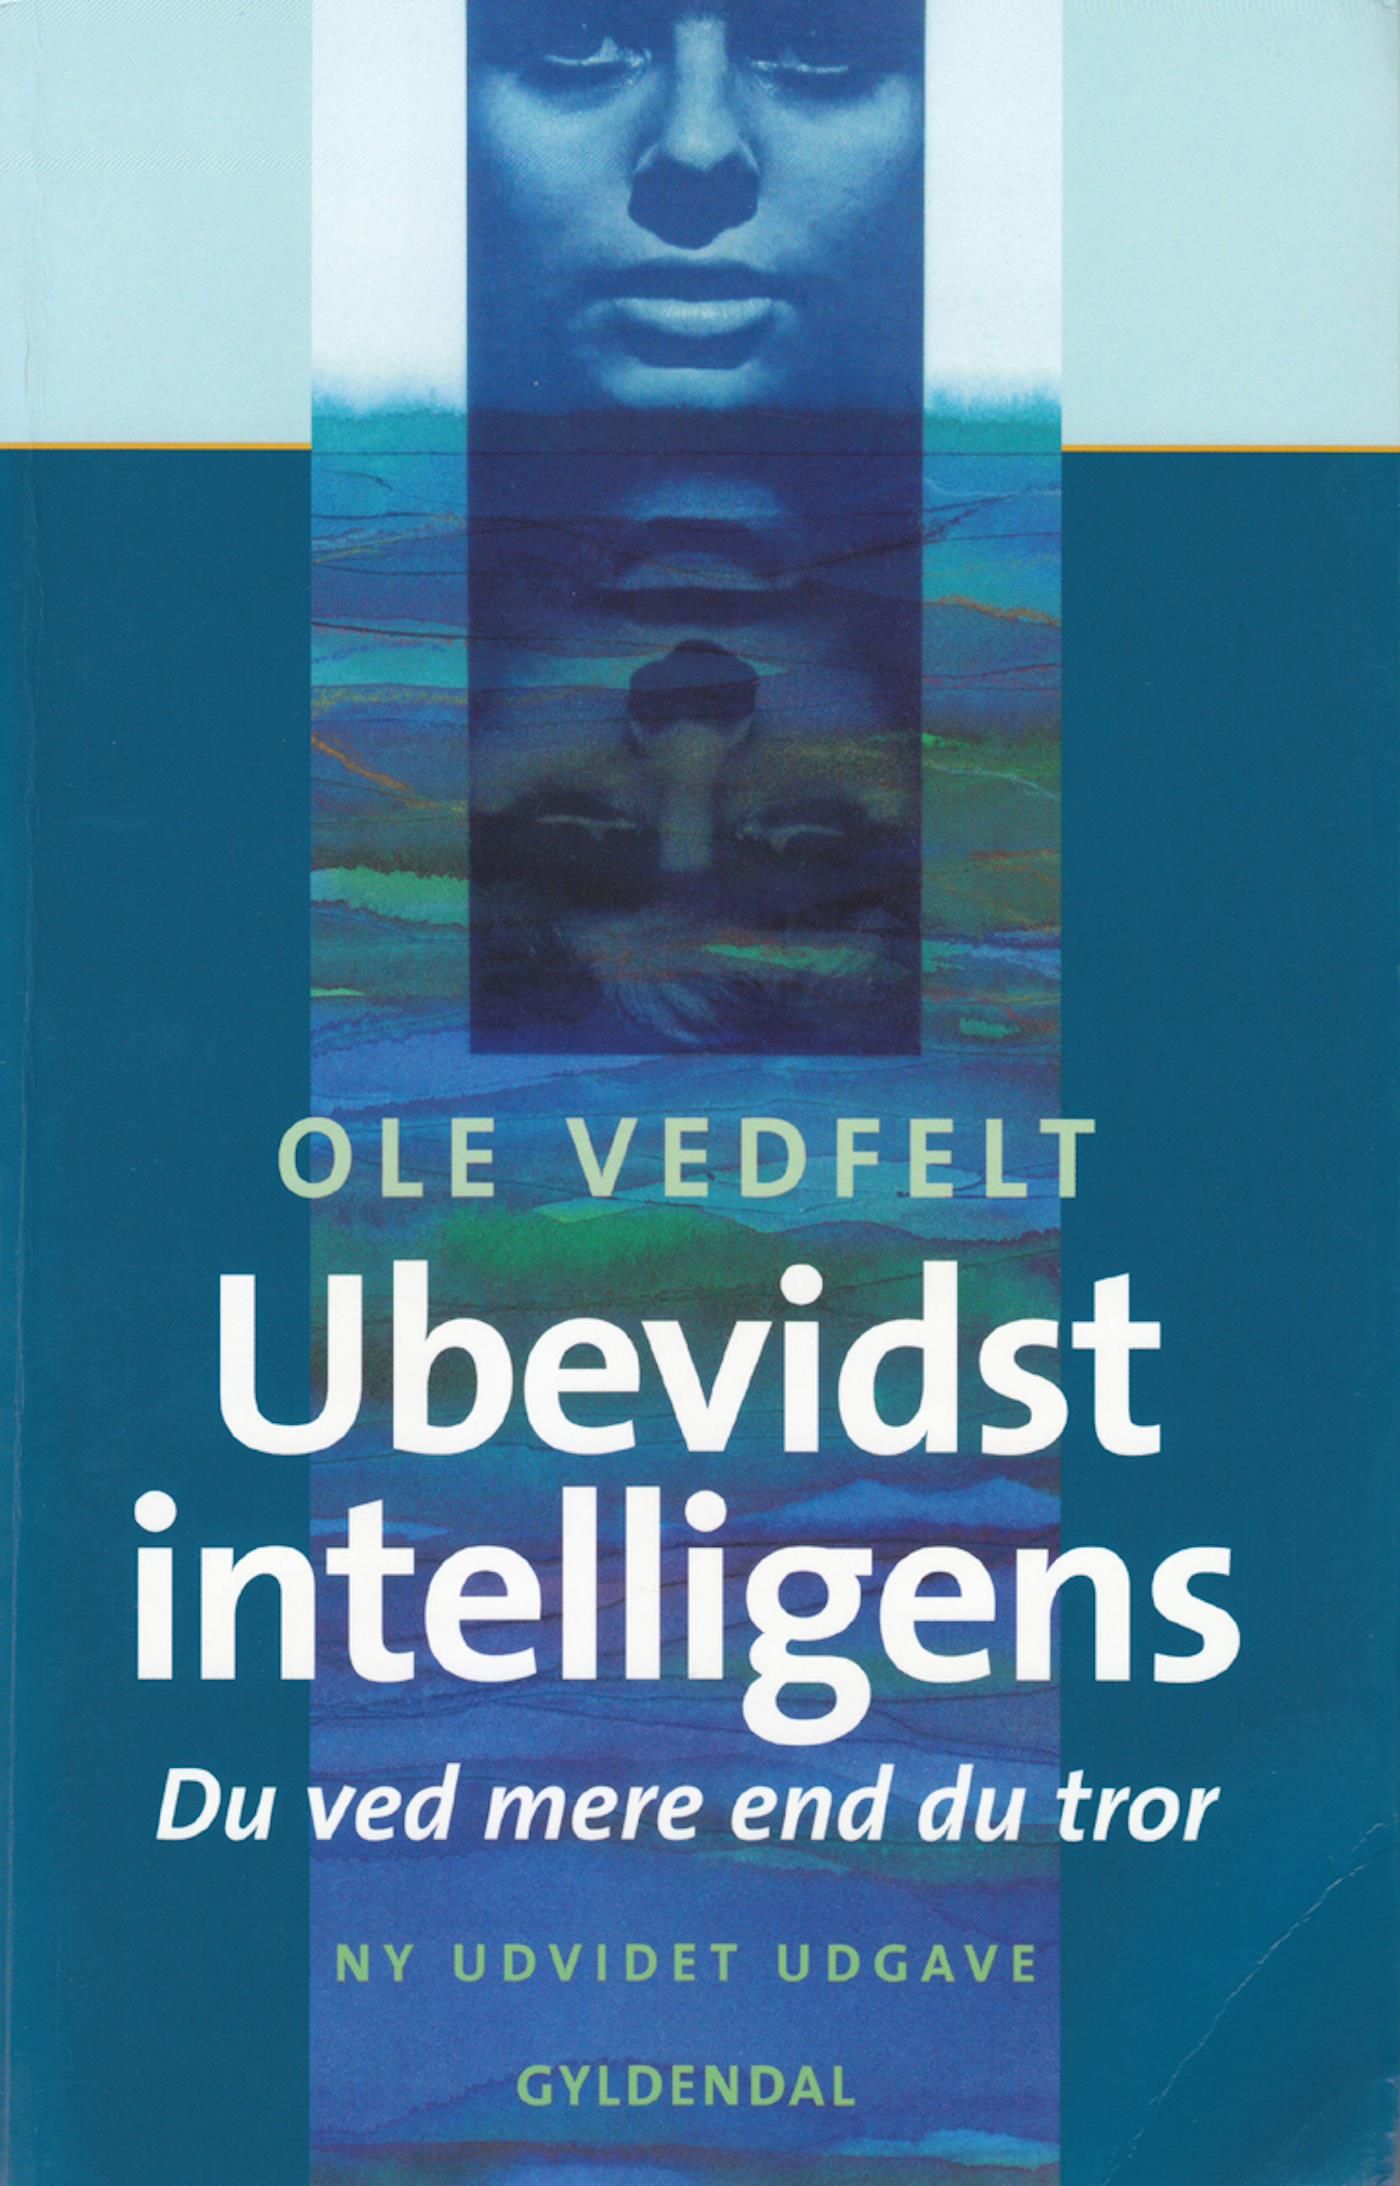 Ubevidst intelligens, eBook by Ole Vedfelt